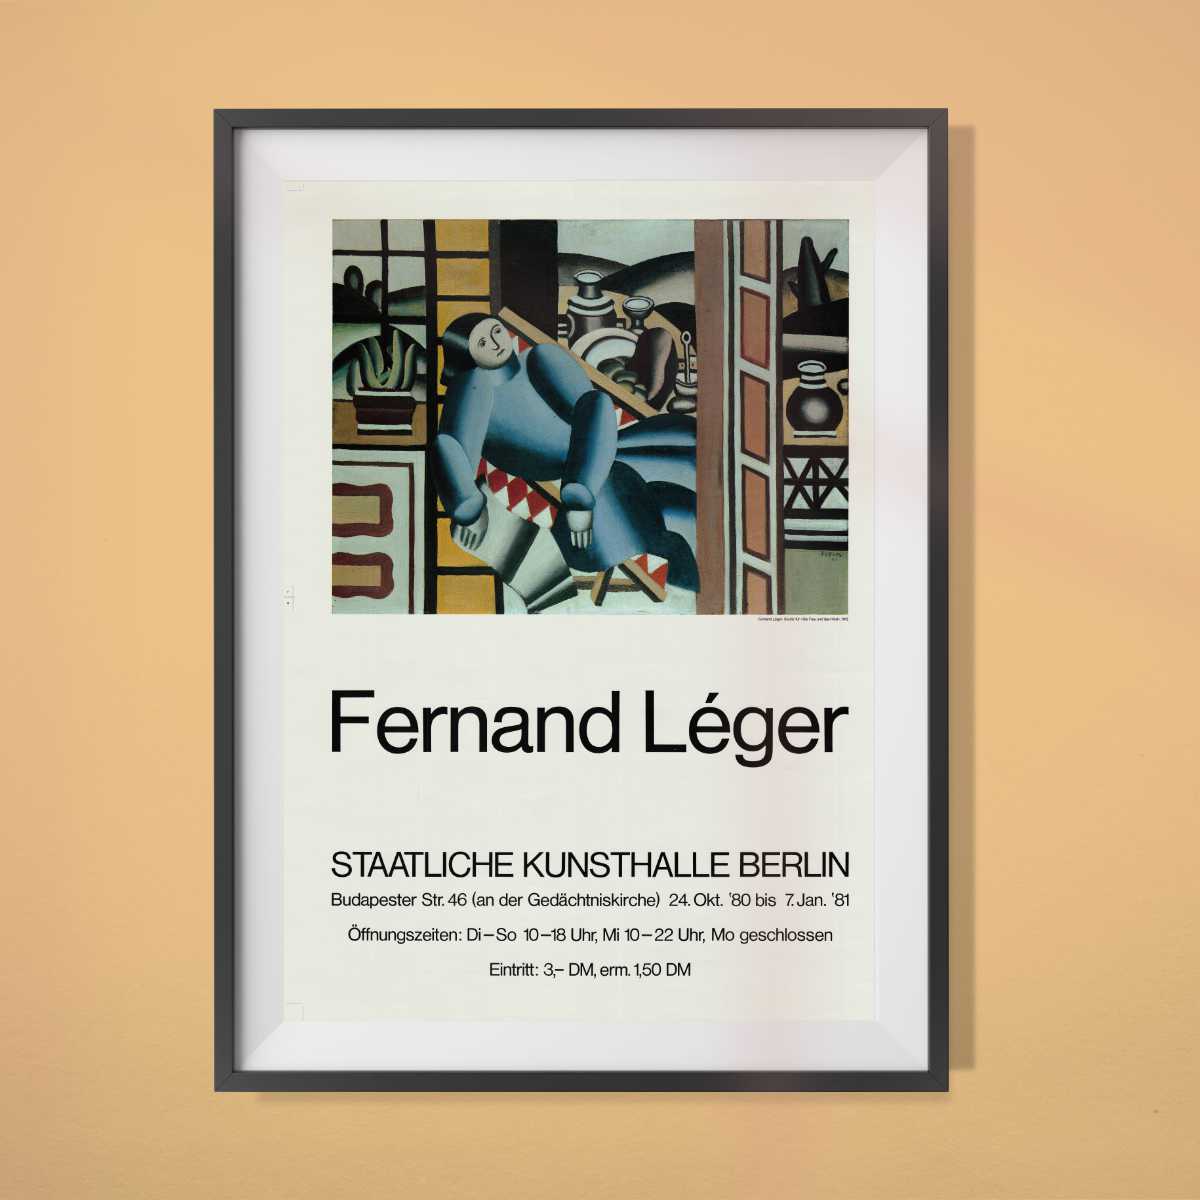 Leger, Fernand - Staatliche Kunsthalle Berlin, 1981